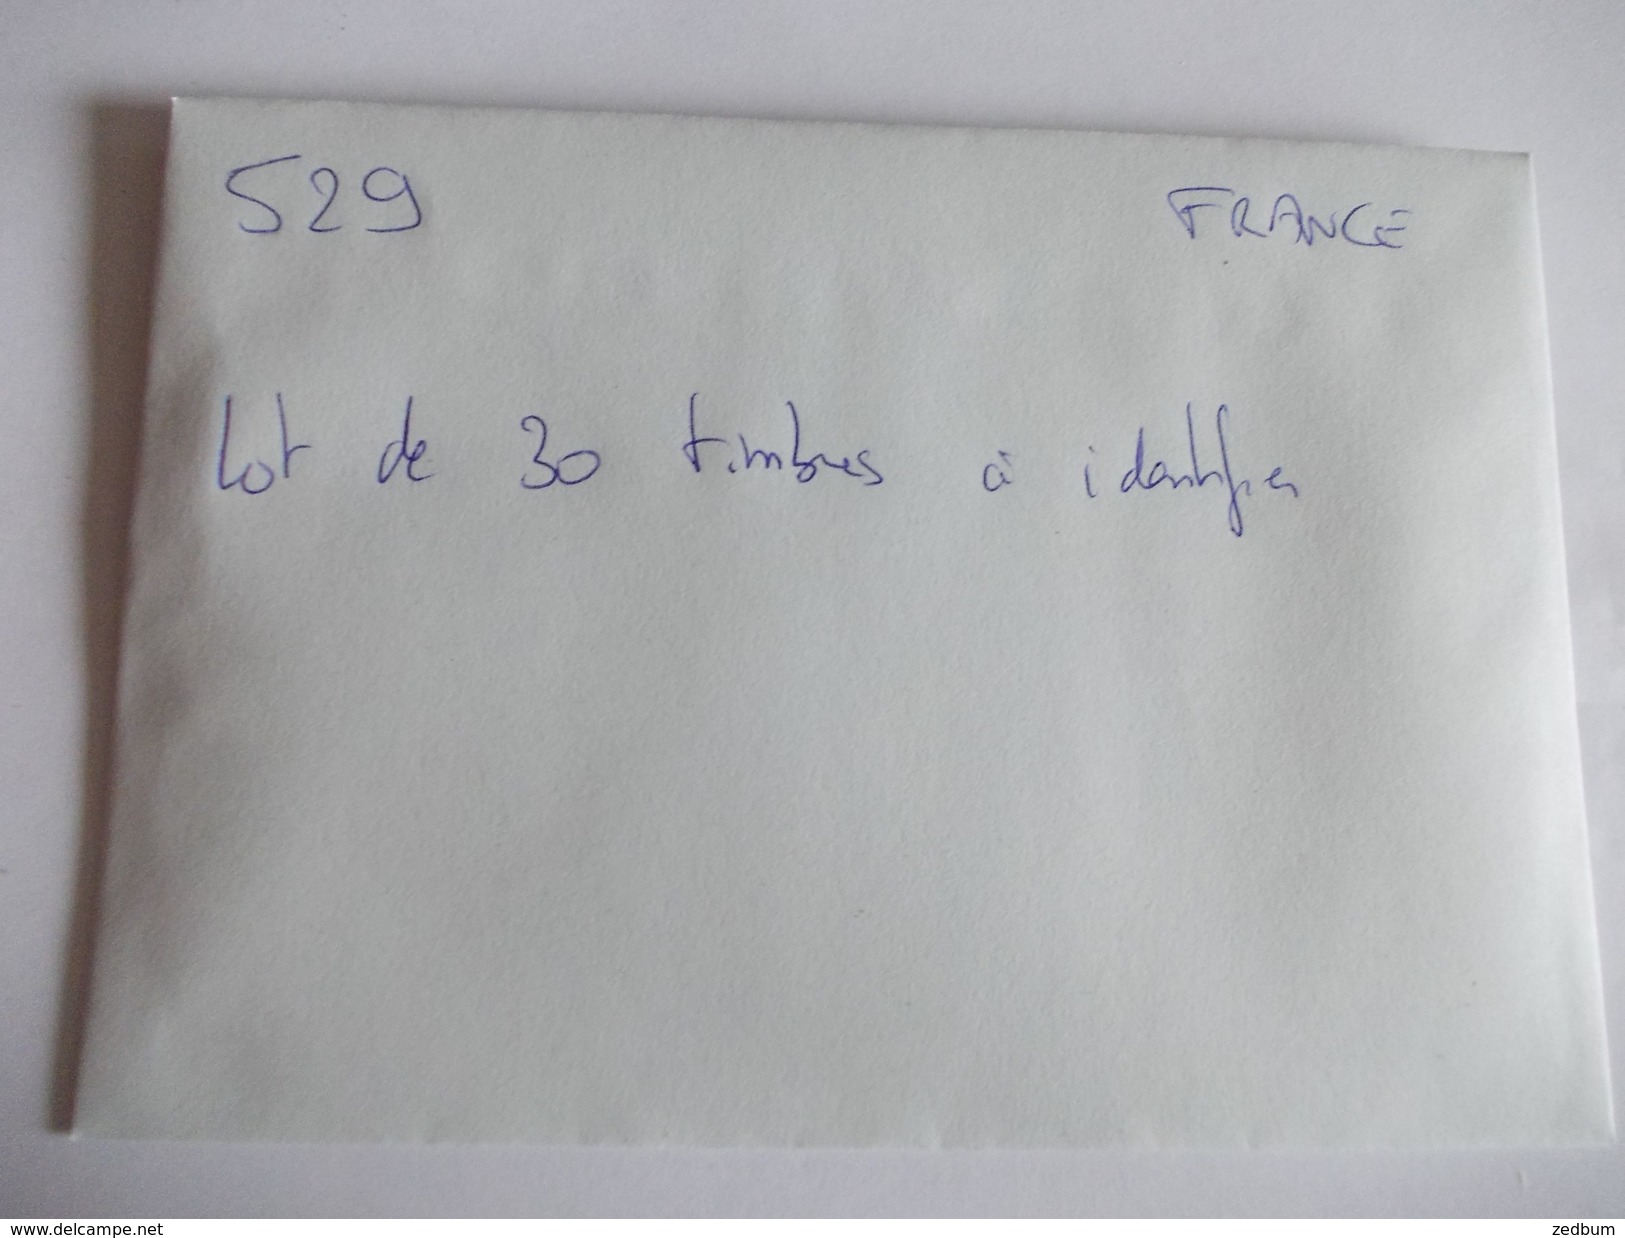 TIMBRE France Lot De 30 Timbres à Identifier N° 529 - Lots & Kiloware (mixtures) - Max. 999 Stamps